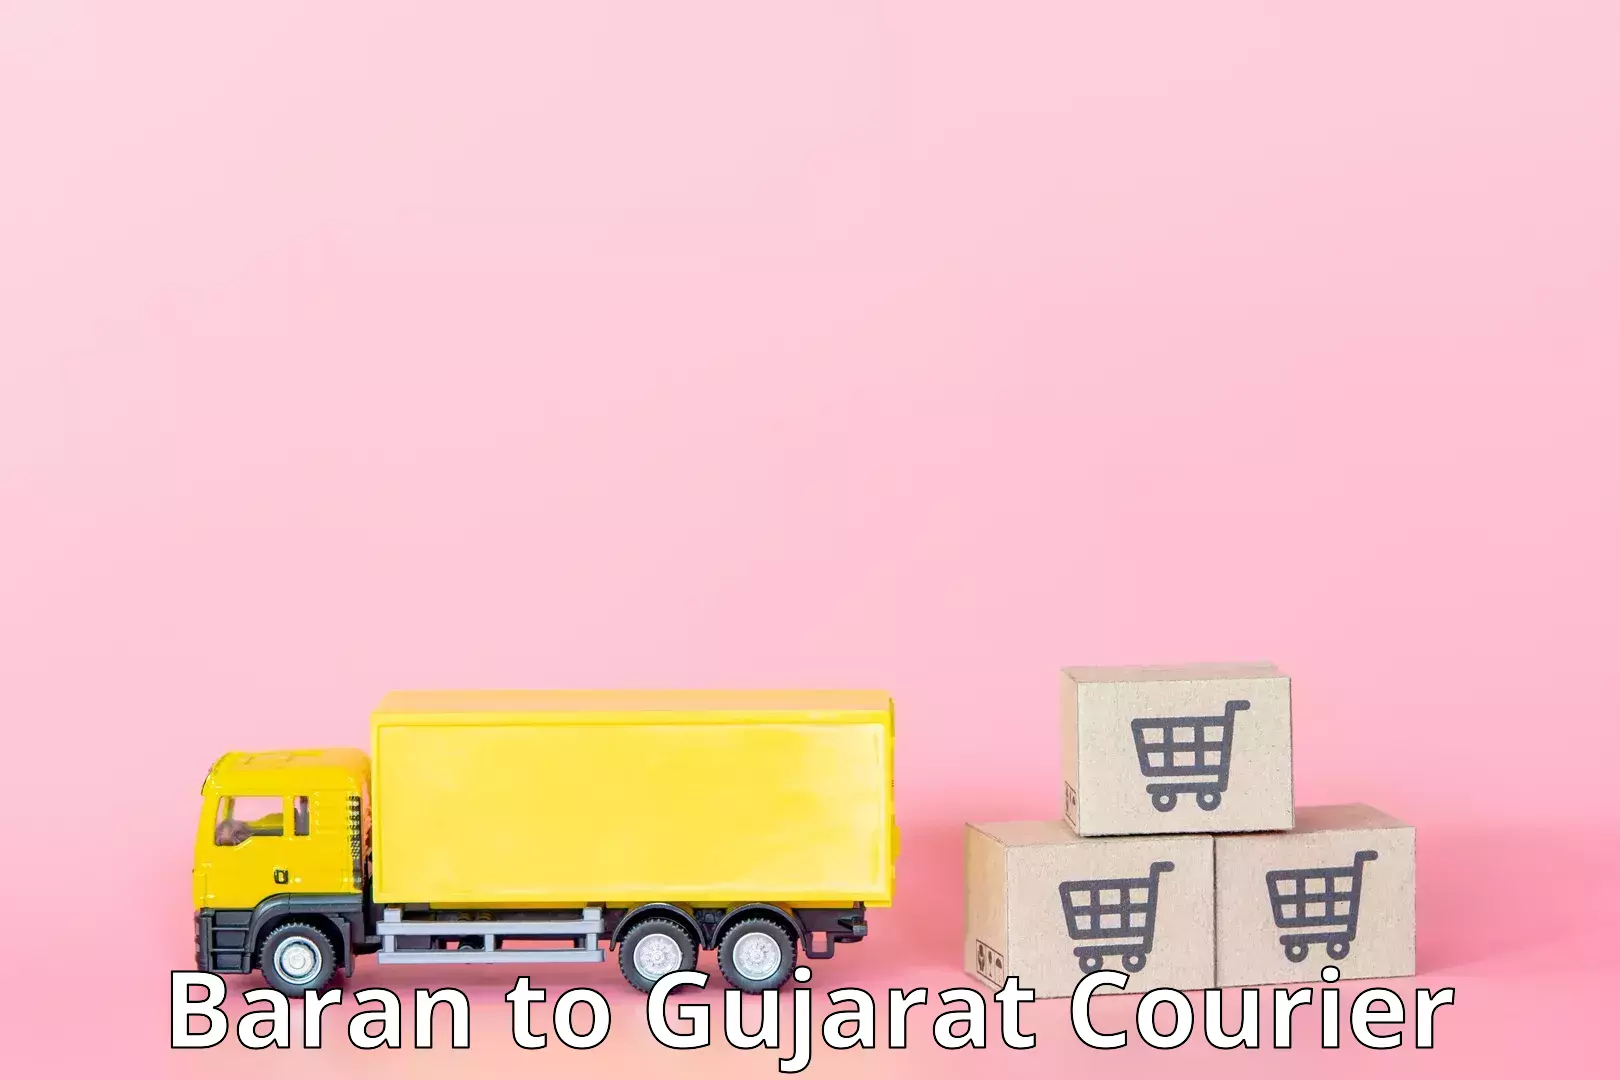 International parcel service Baran to Gujarat